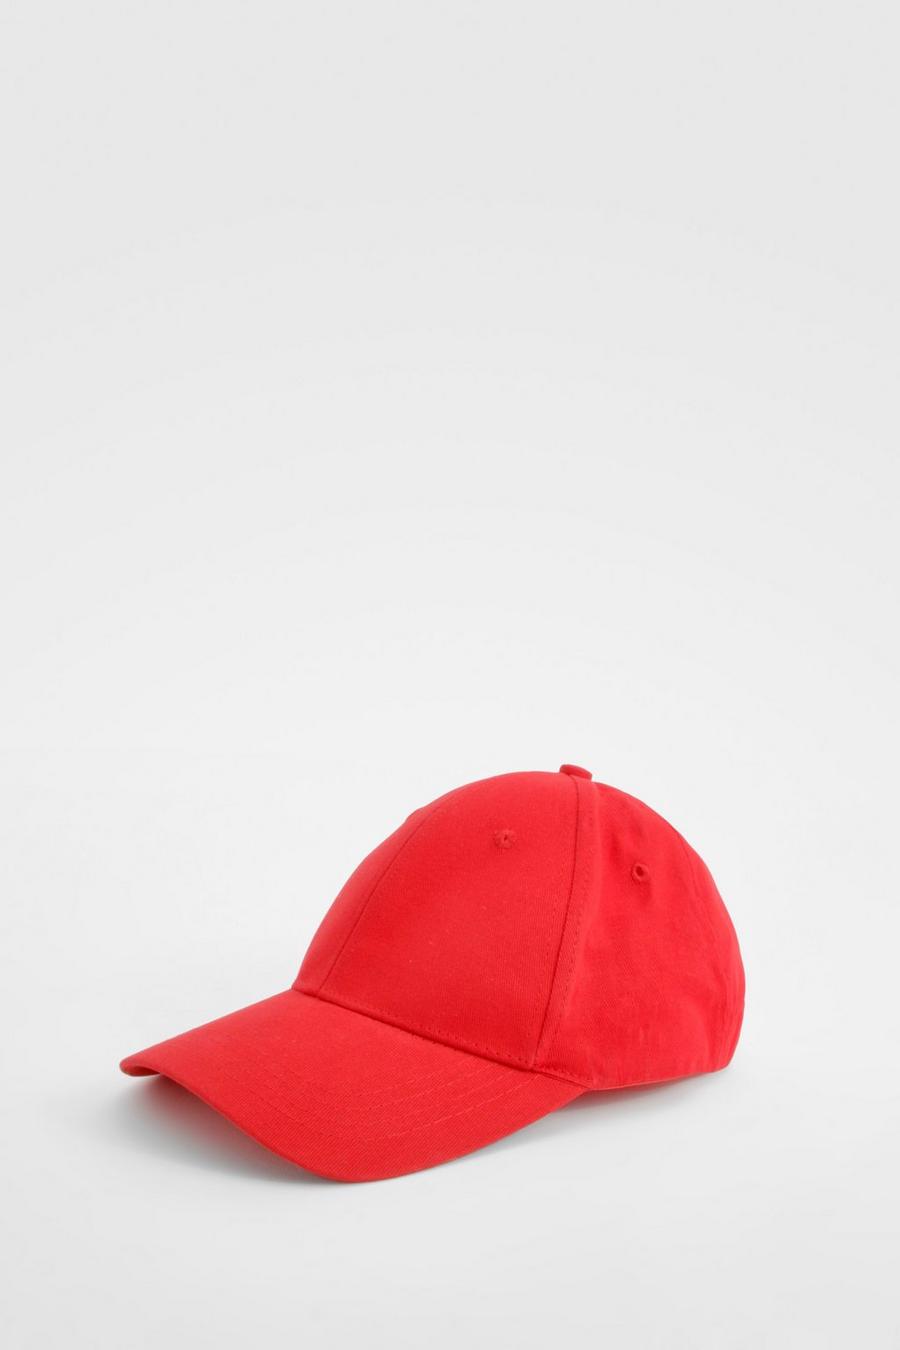 Red Rode Baseball Cap